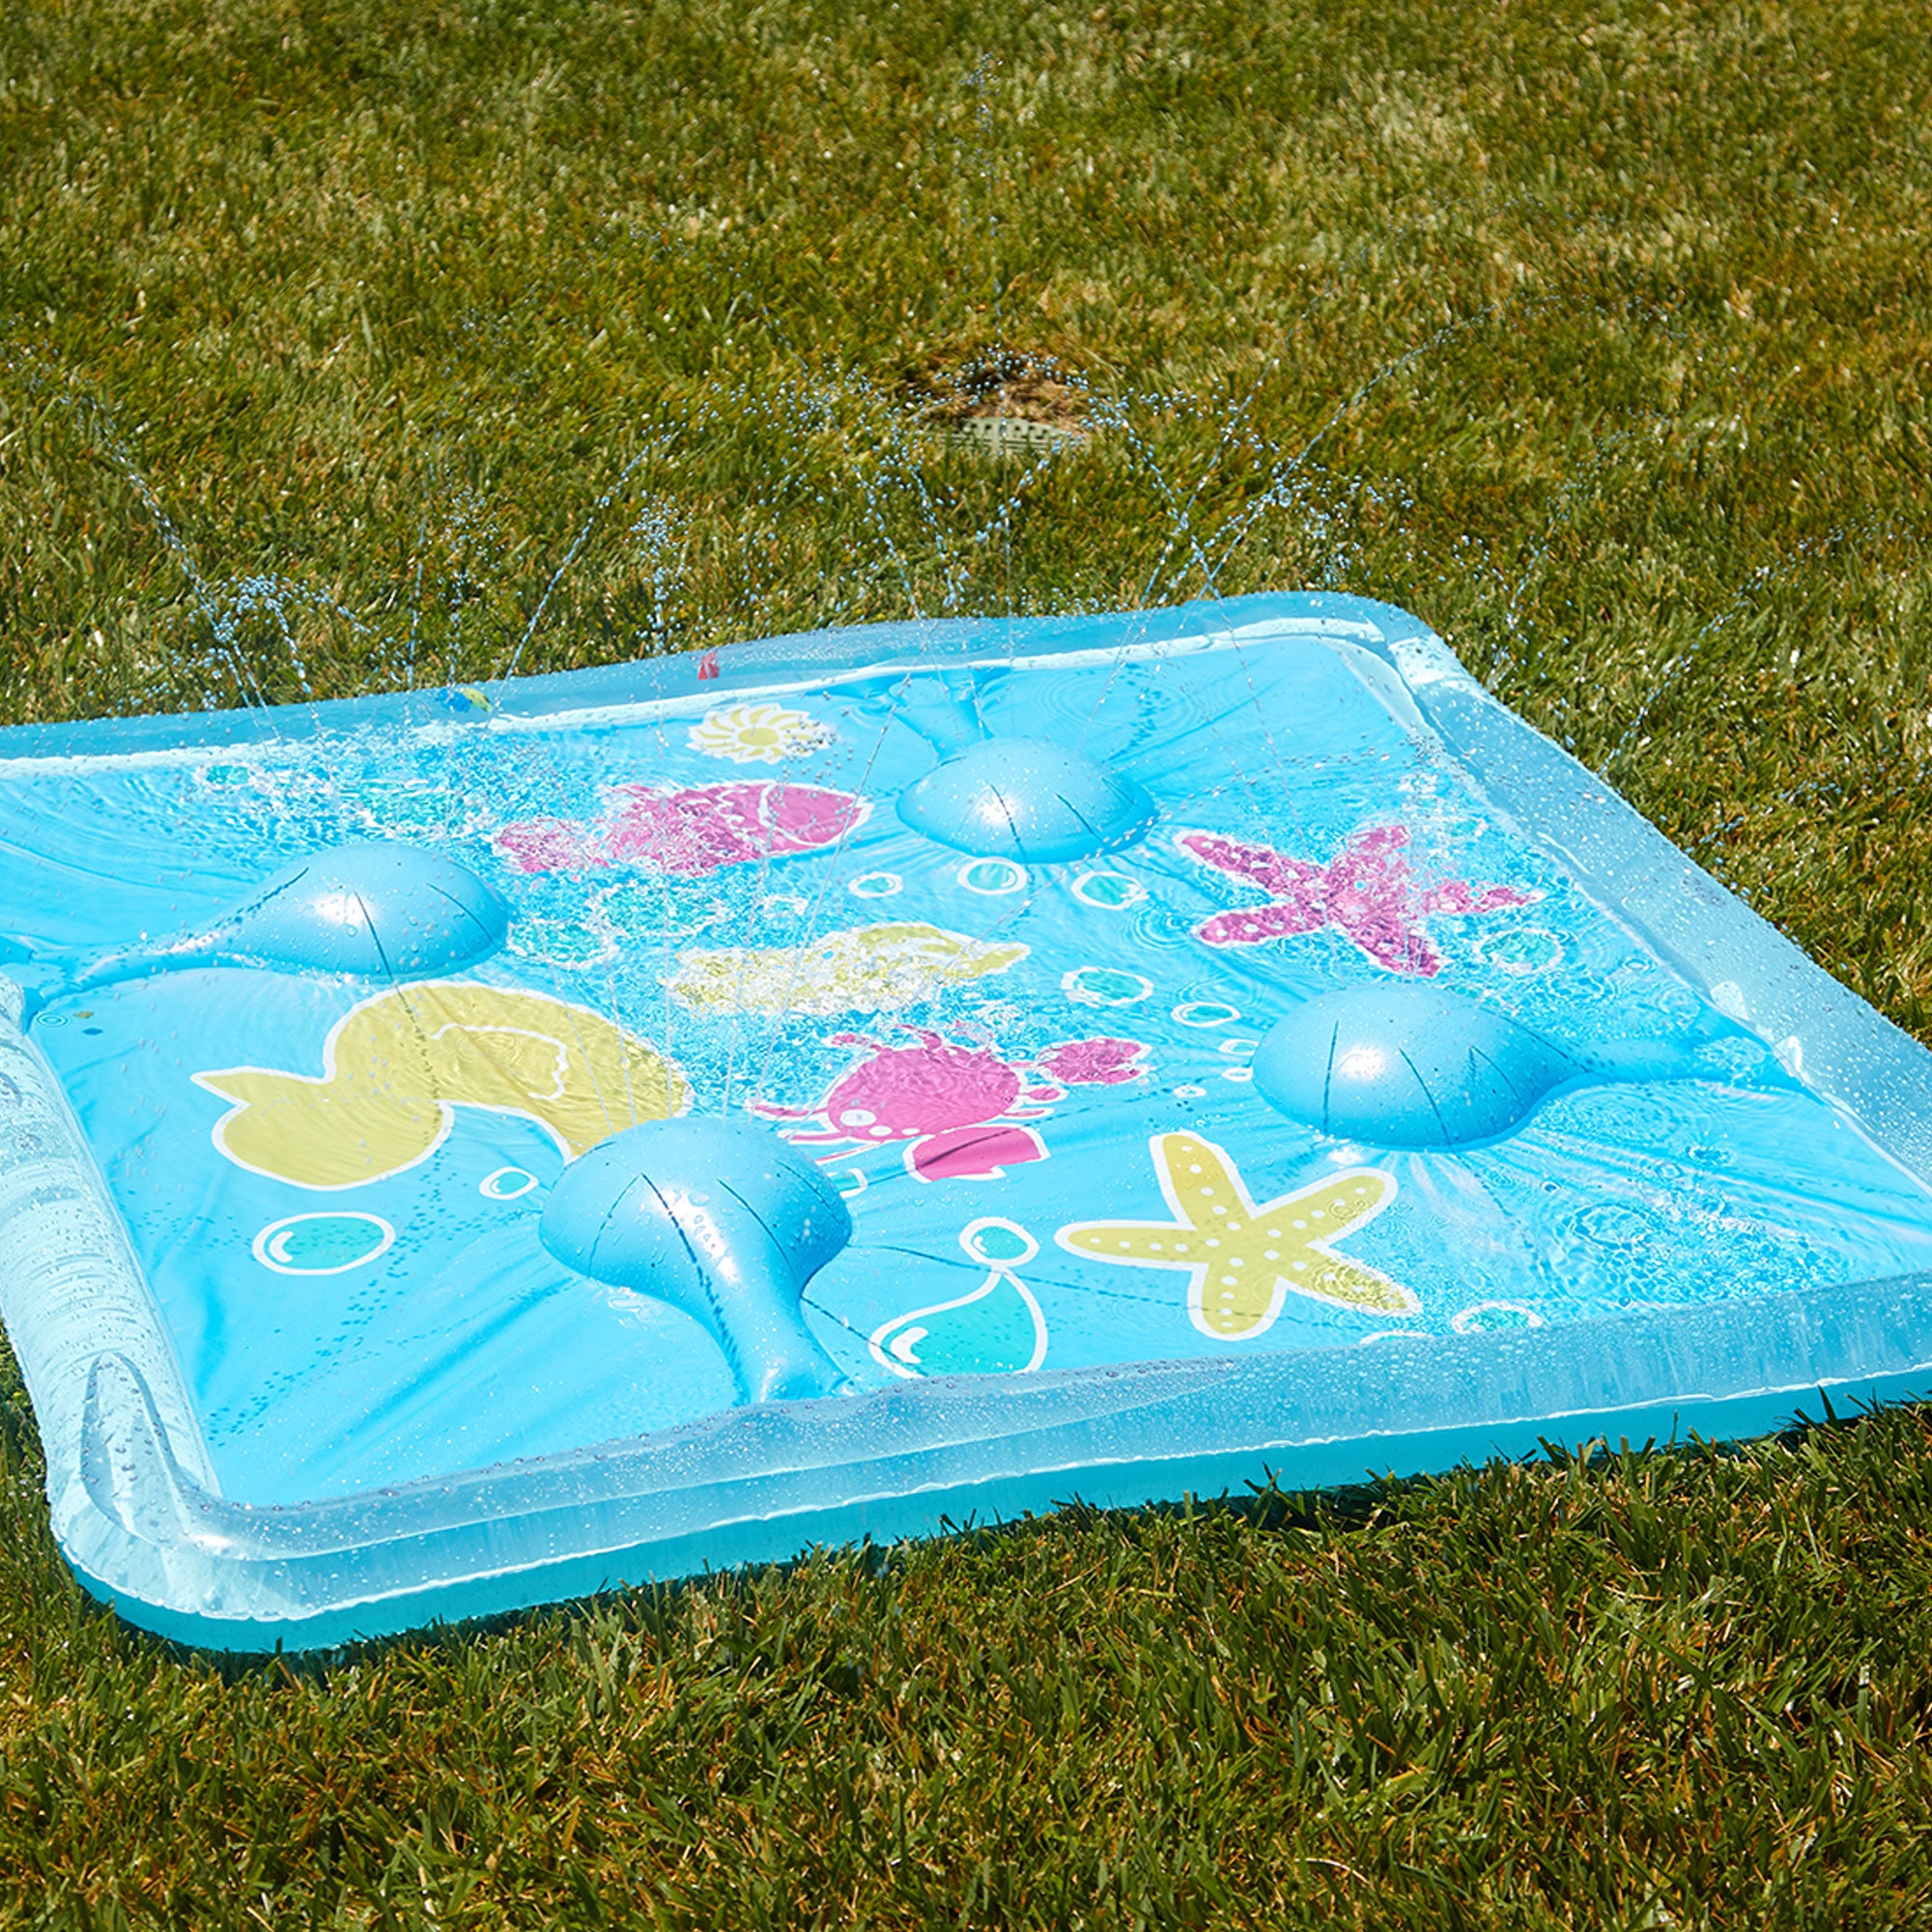 Wham-O Backyard Sea Creature Printed Children's Splash Pad with Inflatable Rim, 12 Pack